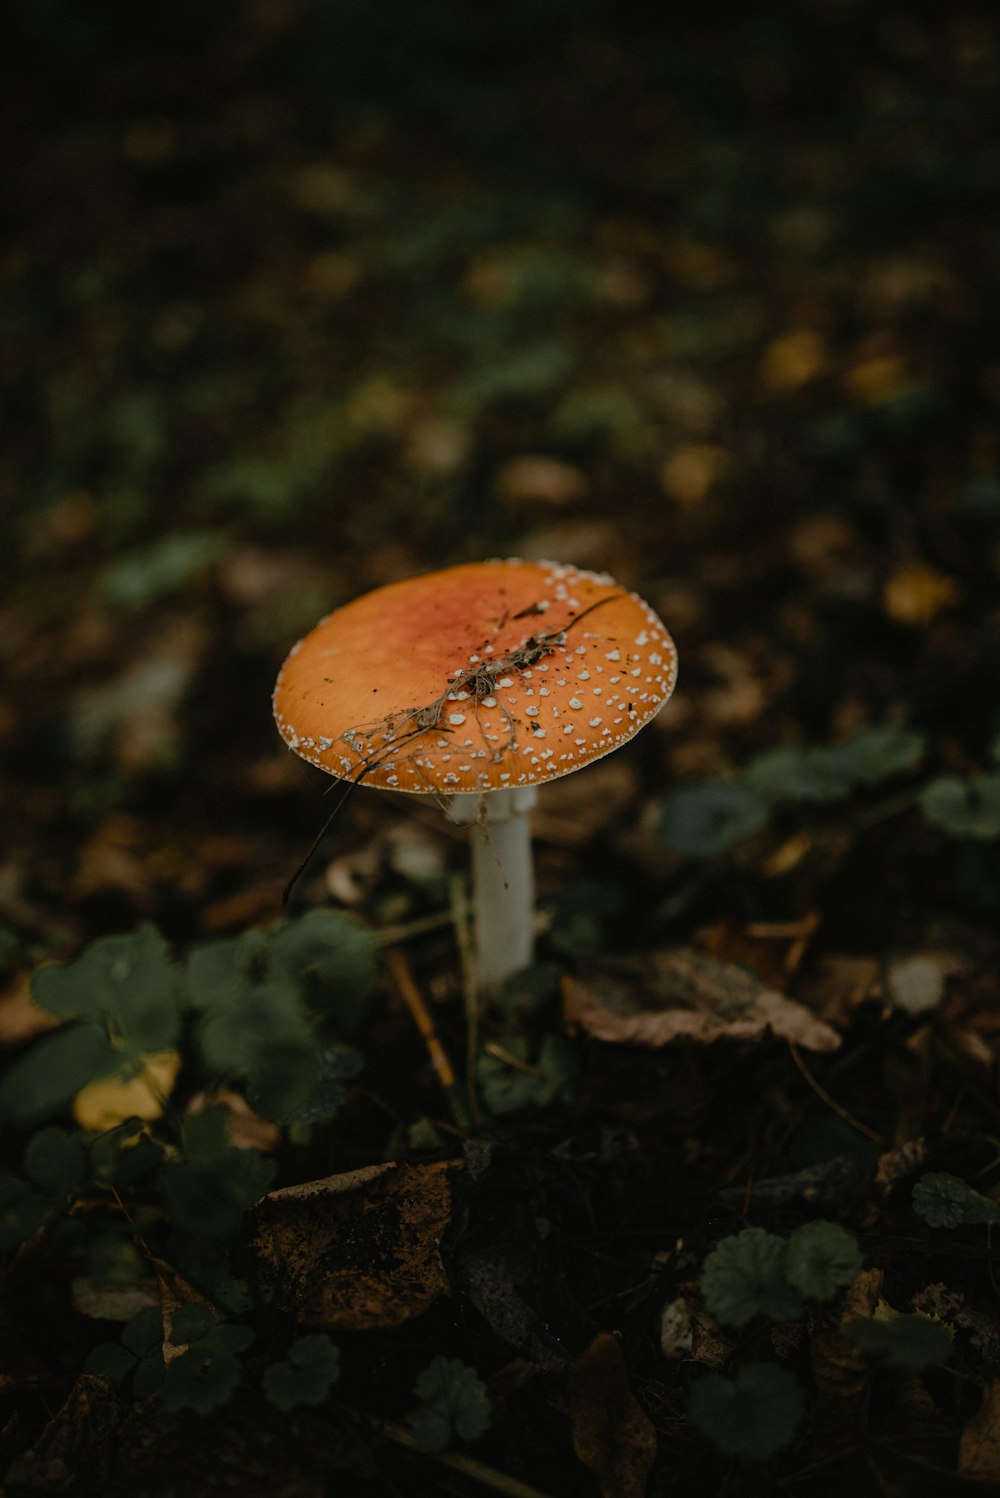 a small orange mushroom sitting on the ground